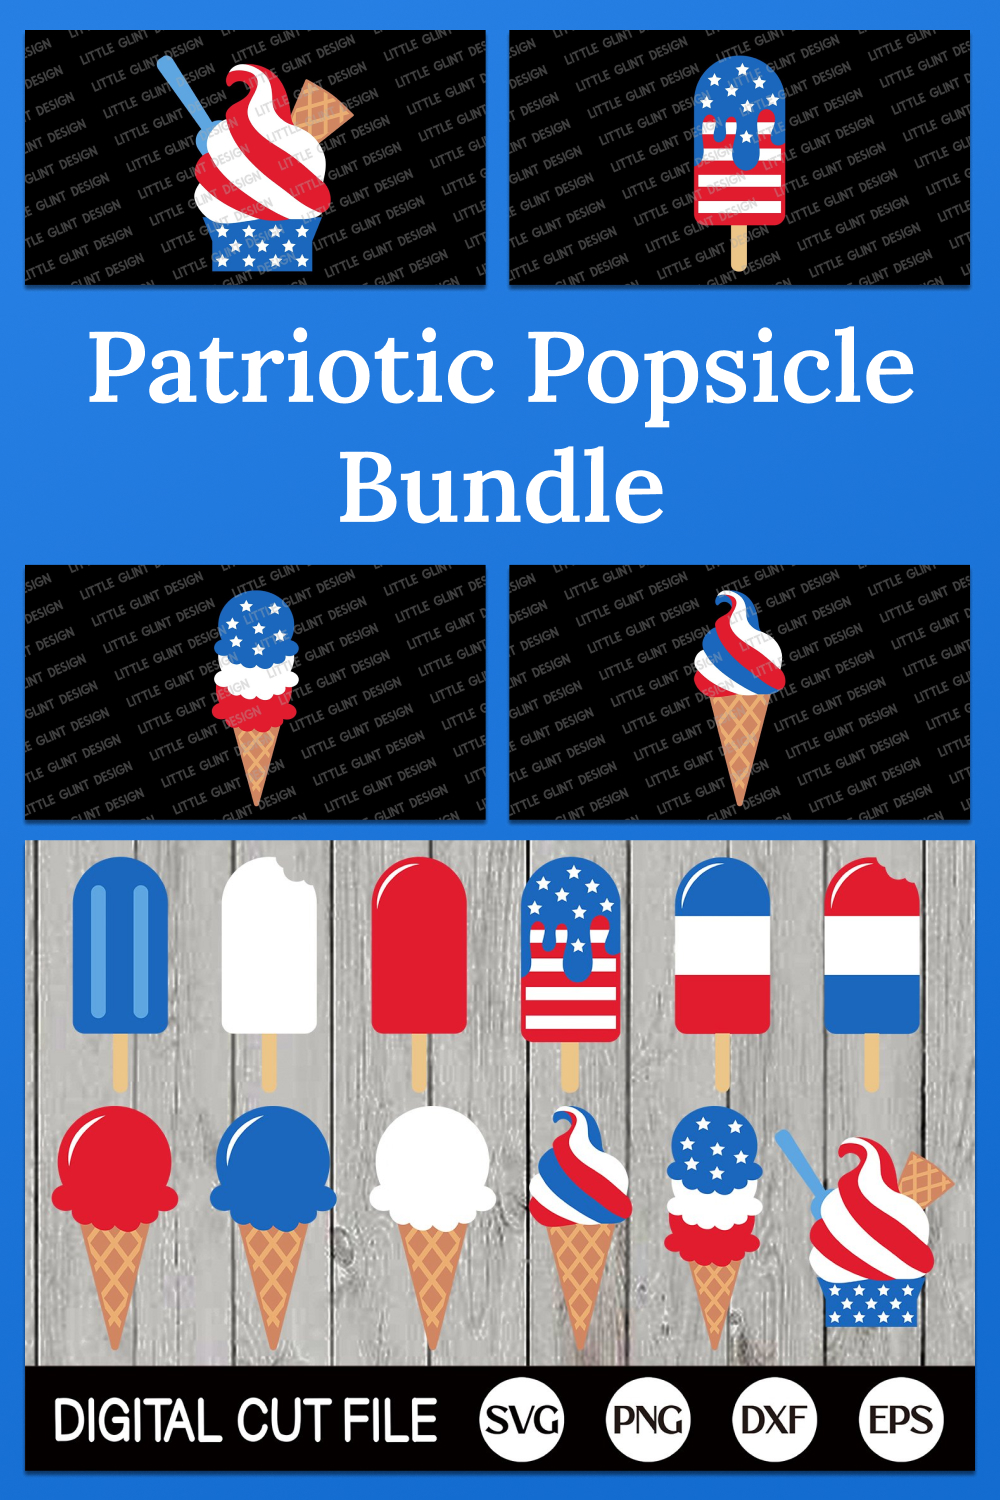 Patriotic popsicle bundle of pinterest.